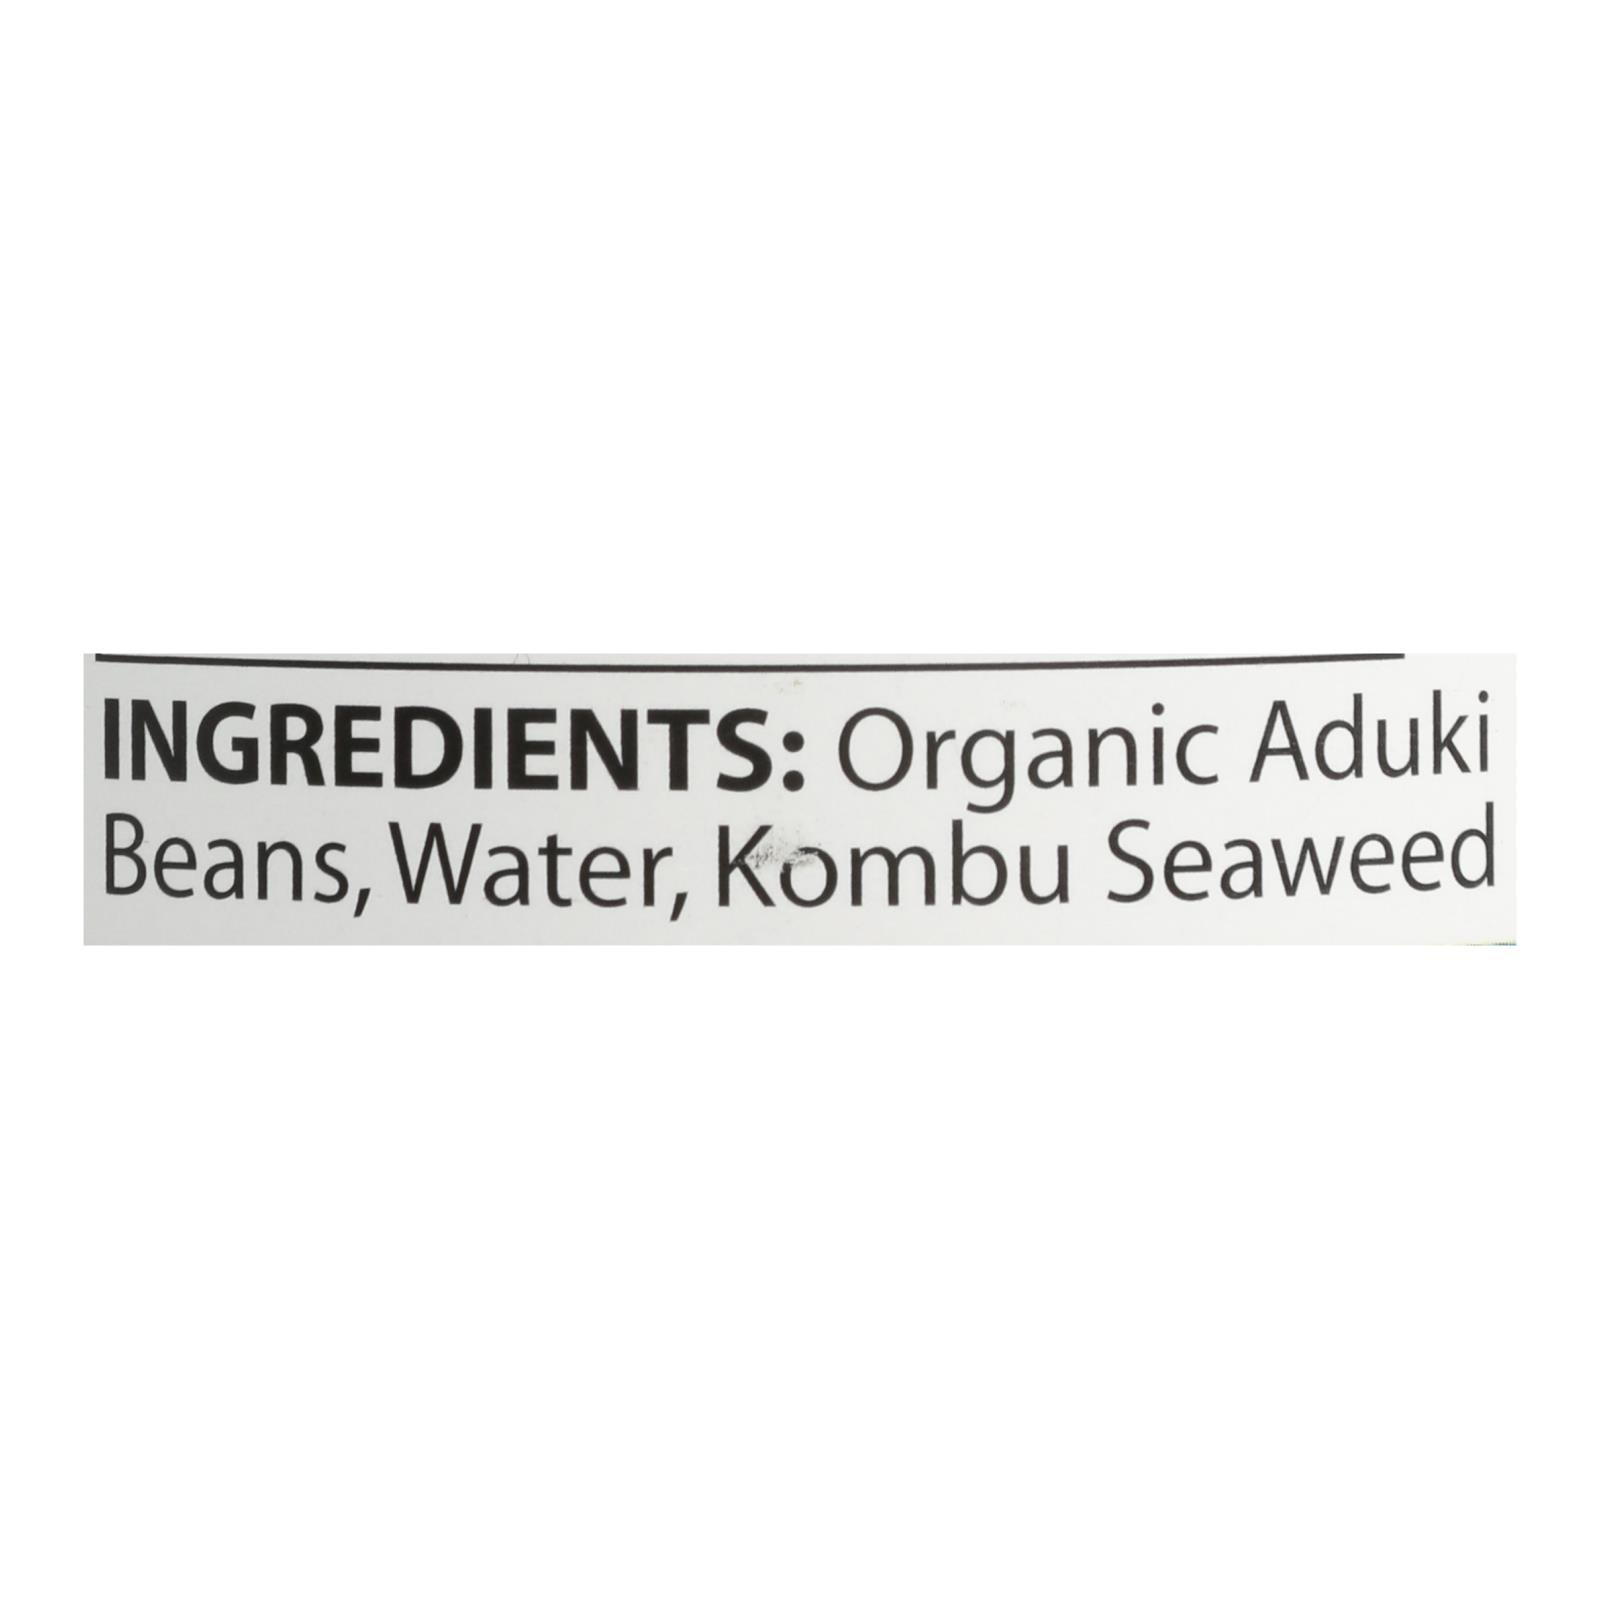 Eden Foods Organic Aduki Beans - Case Of 12 - 15 Oz.